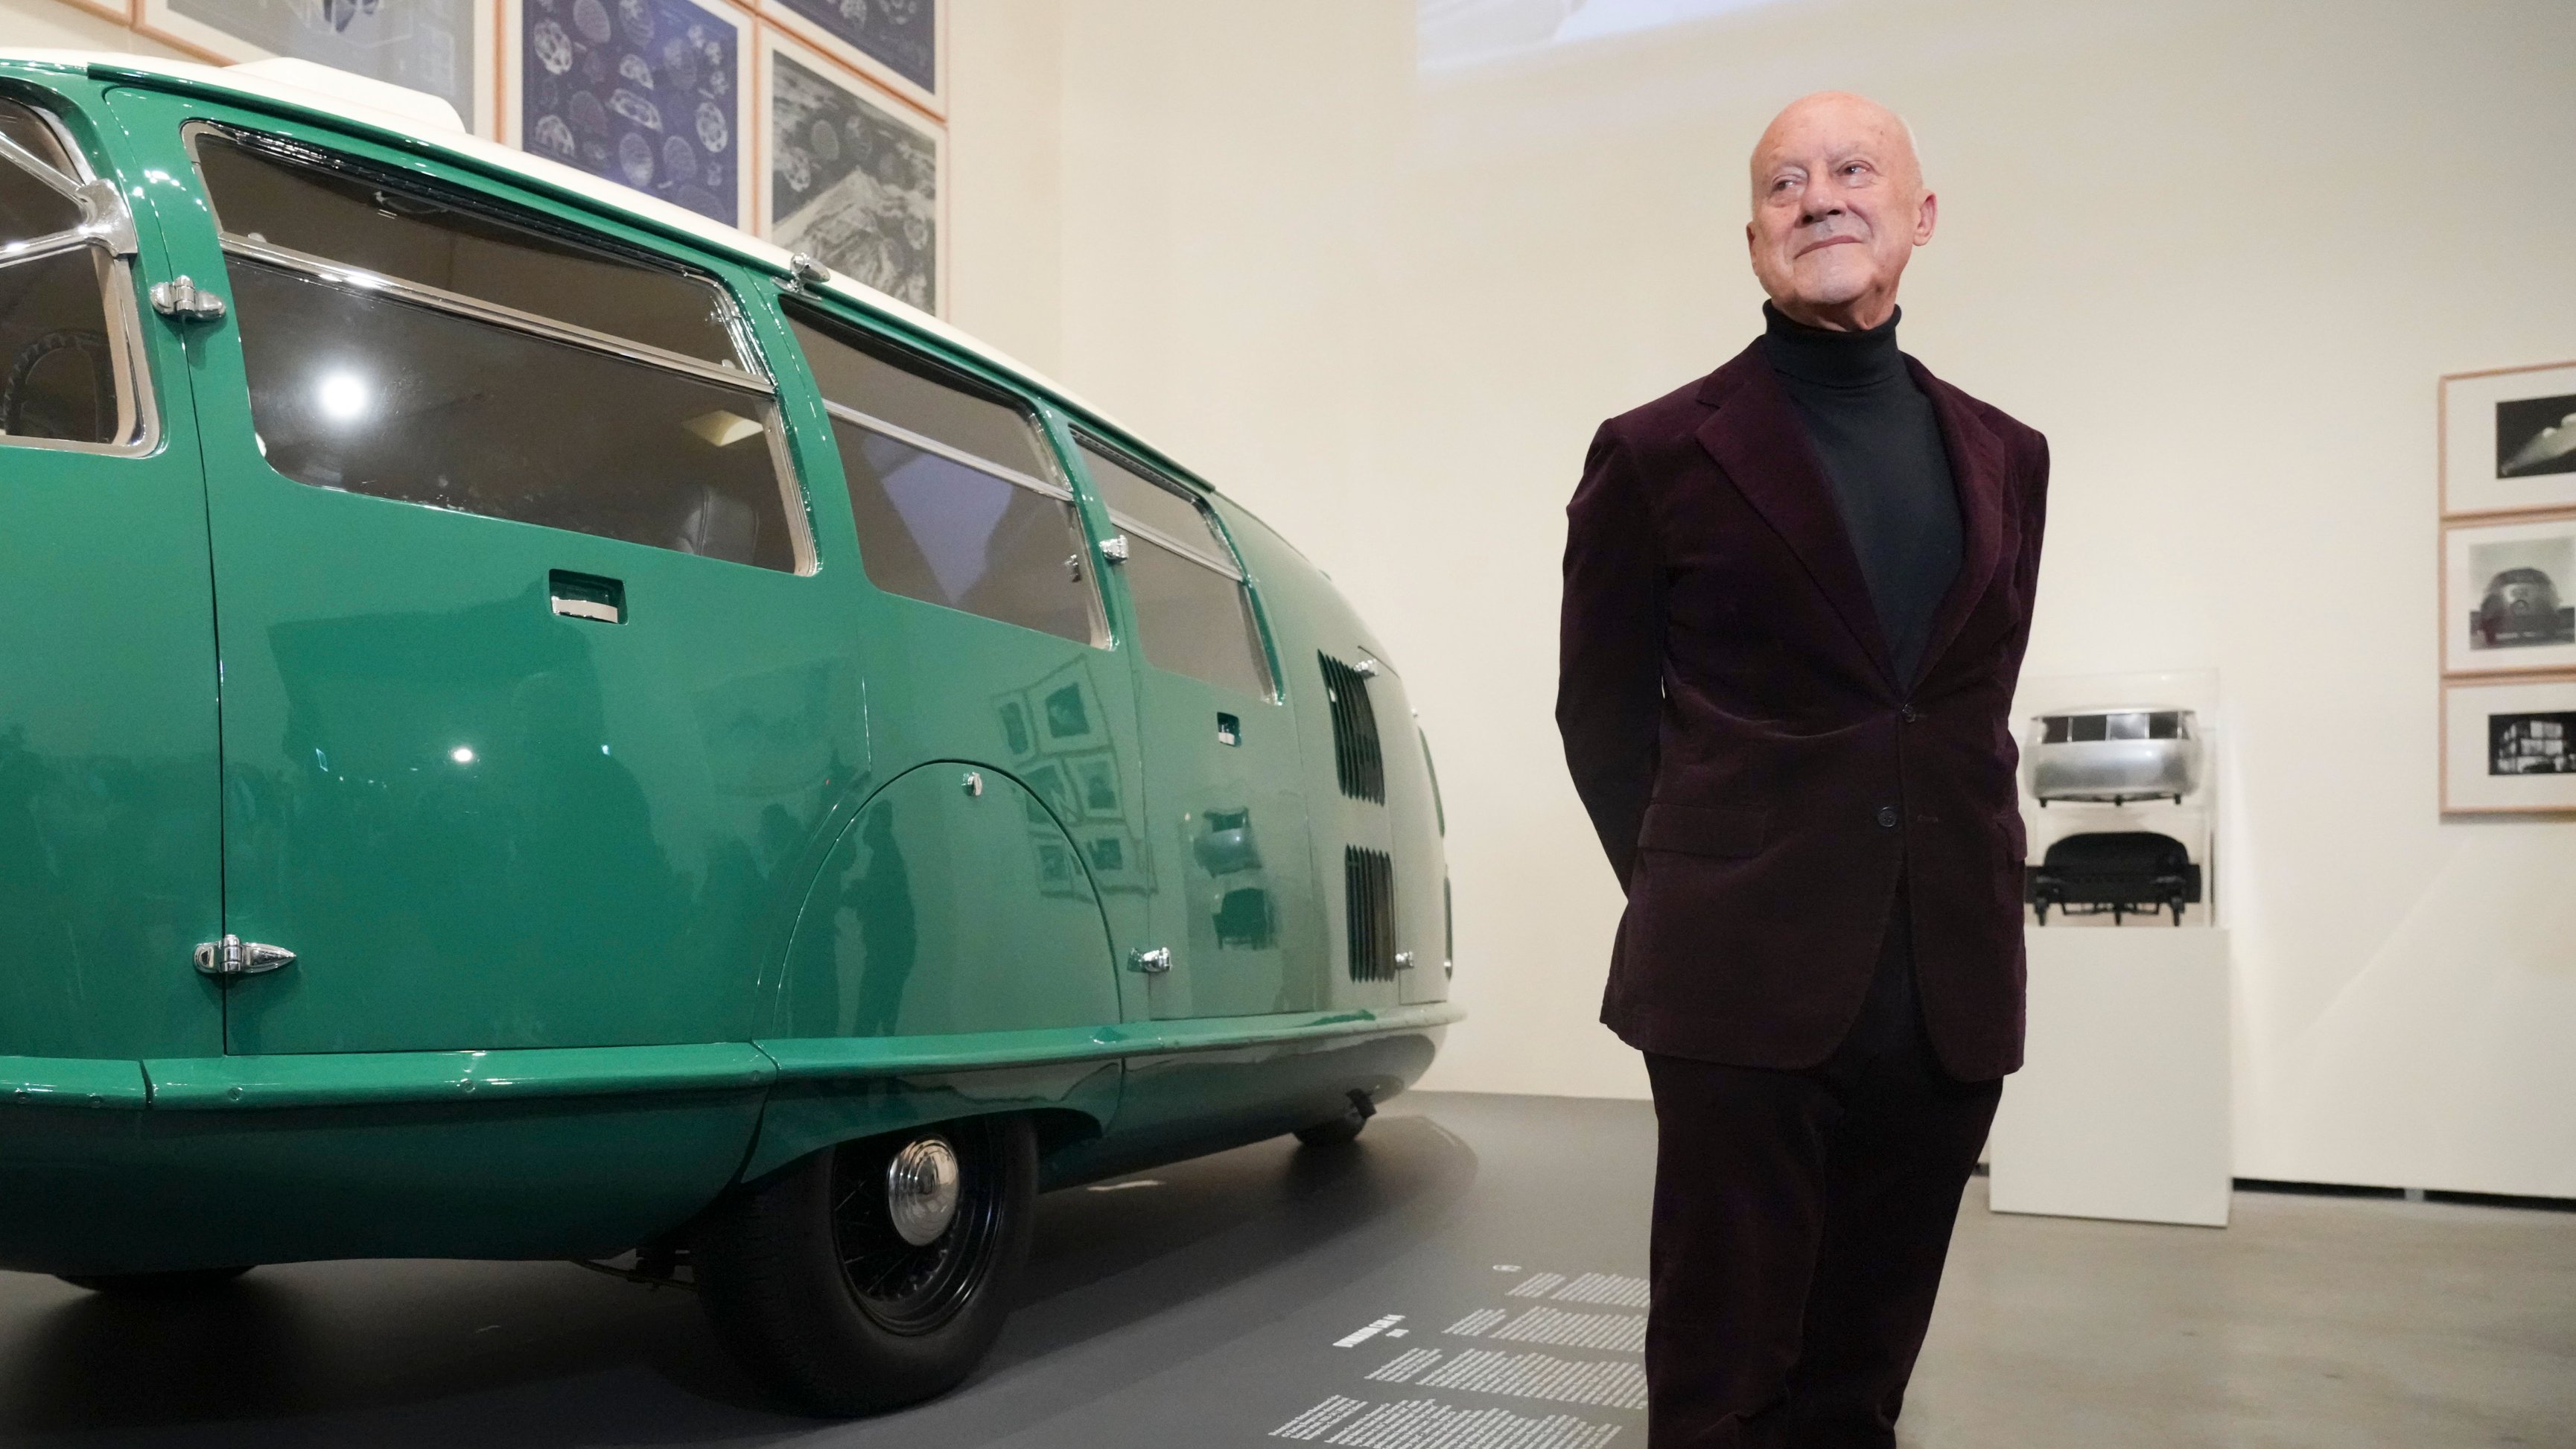 Guggenheim Museum Bilbao Presents An Exhibition On Automobiles